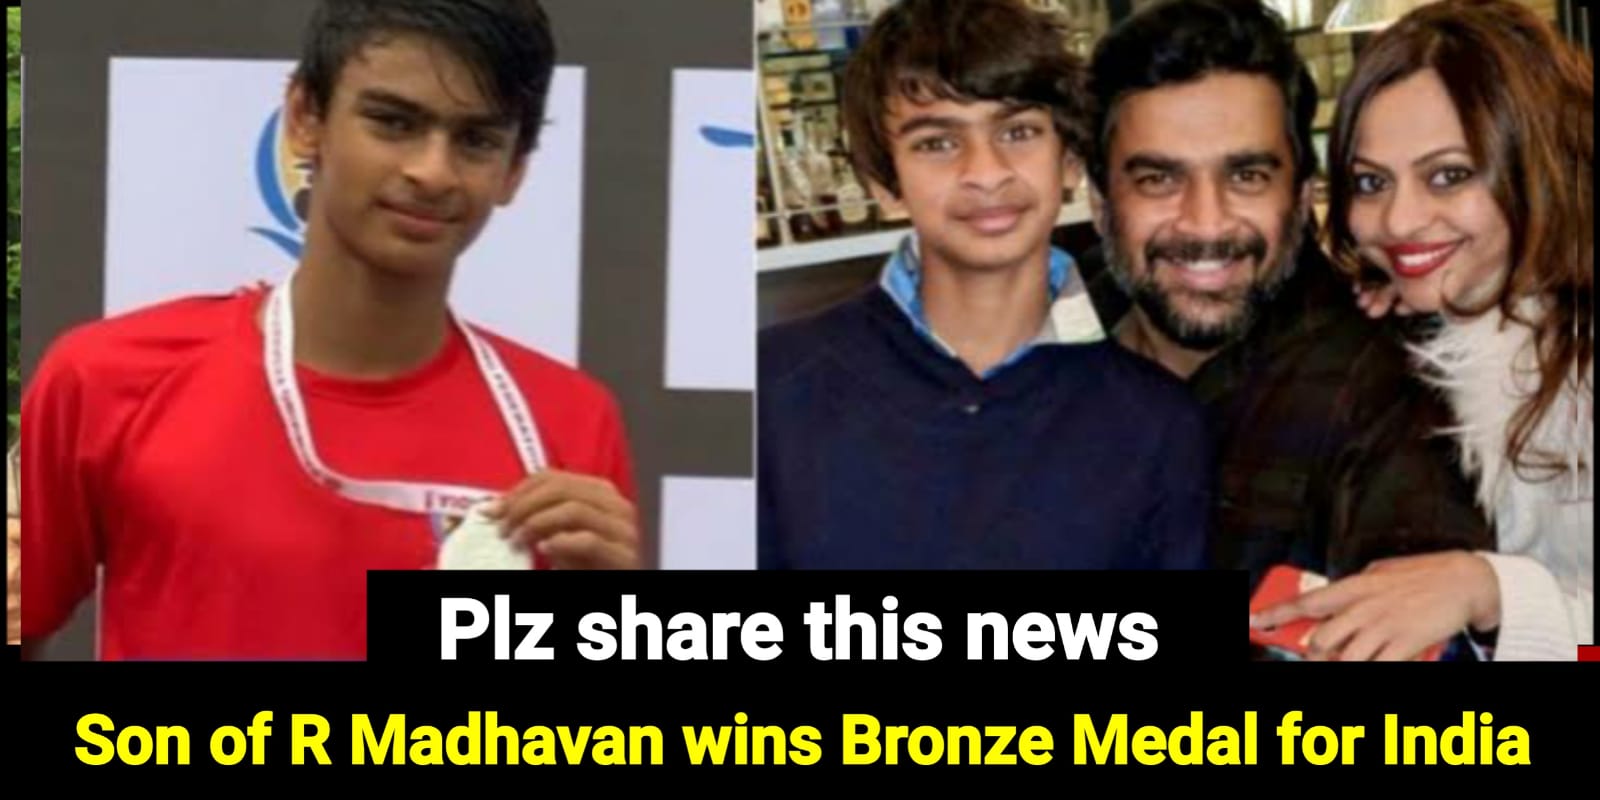 While SRK son is under-arrest in Drug case, Madhavan's son wins Bronze for India